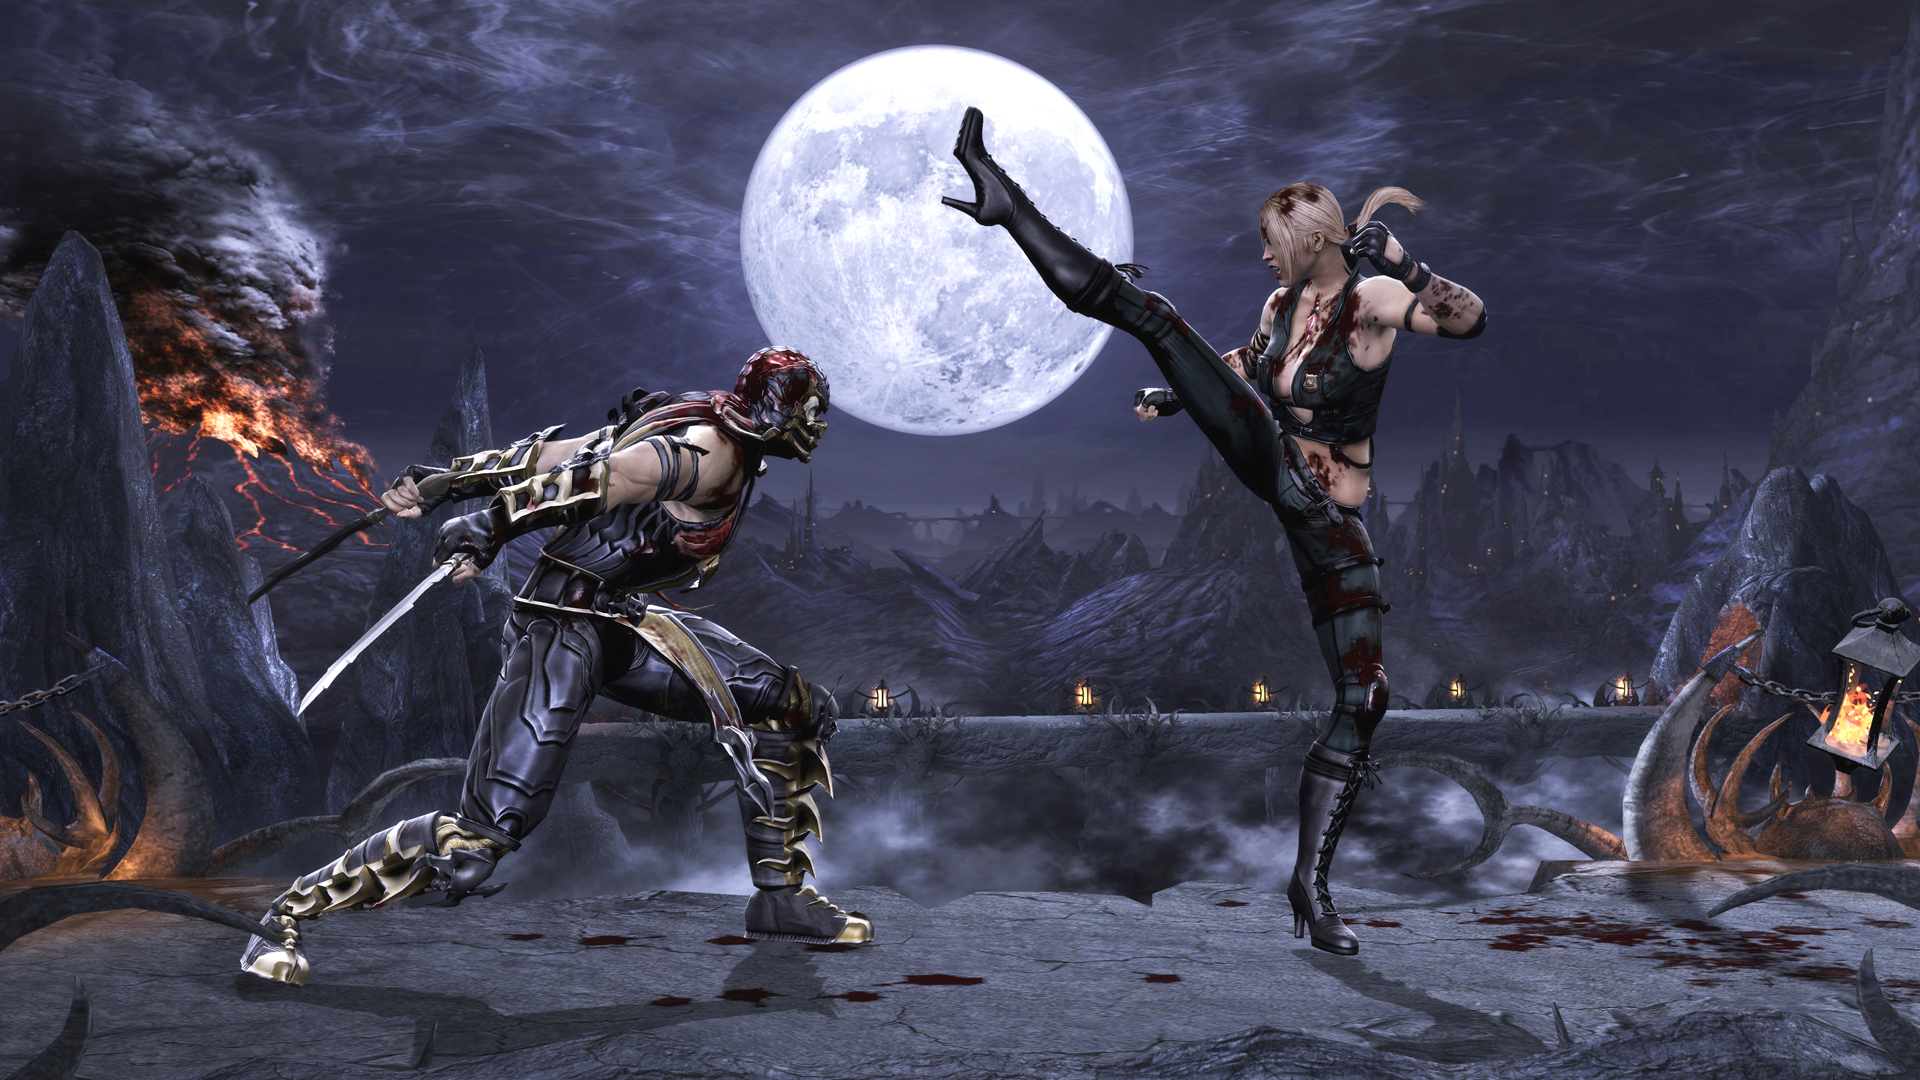 Mortal_Kombat_2011_Sonya_Blade_vs_Scorpion